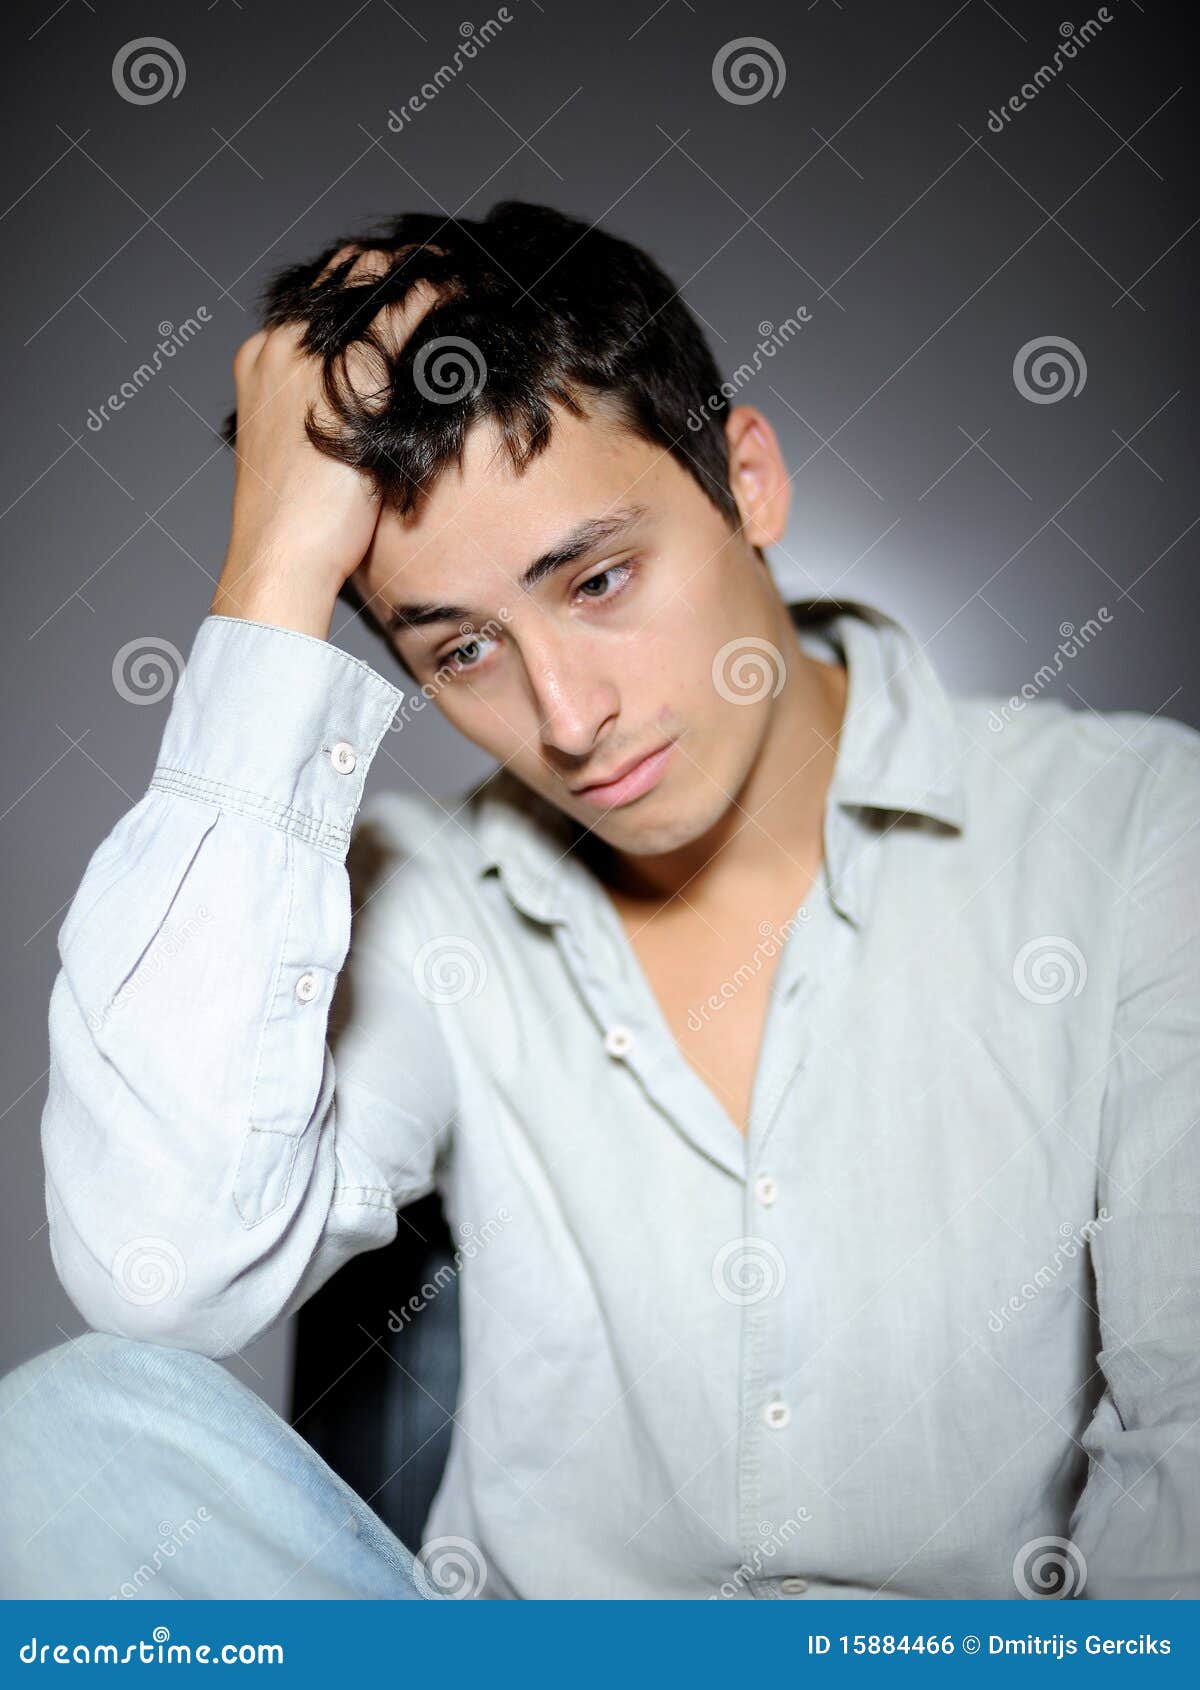 Expressions.man Feeling Sad and Depressed Stock Photo - Image of ...